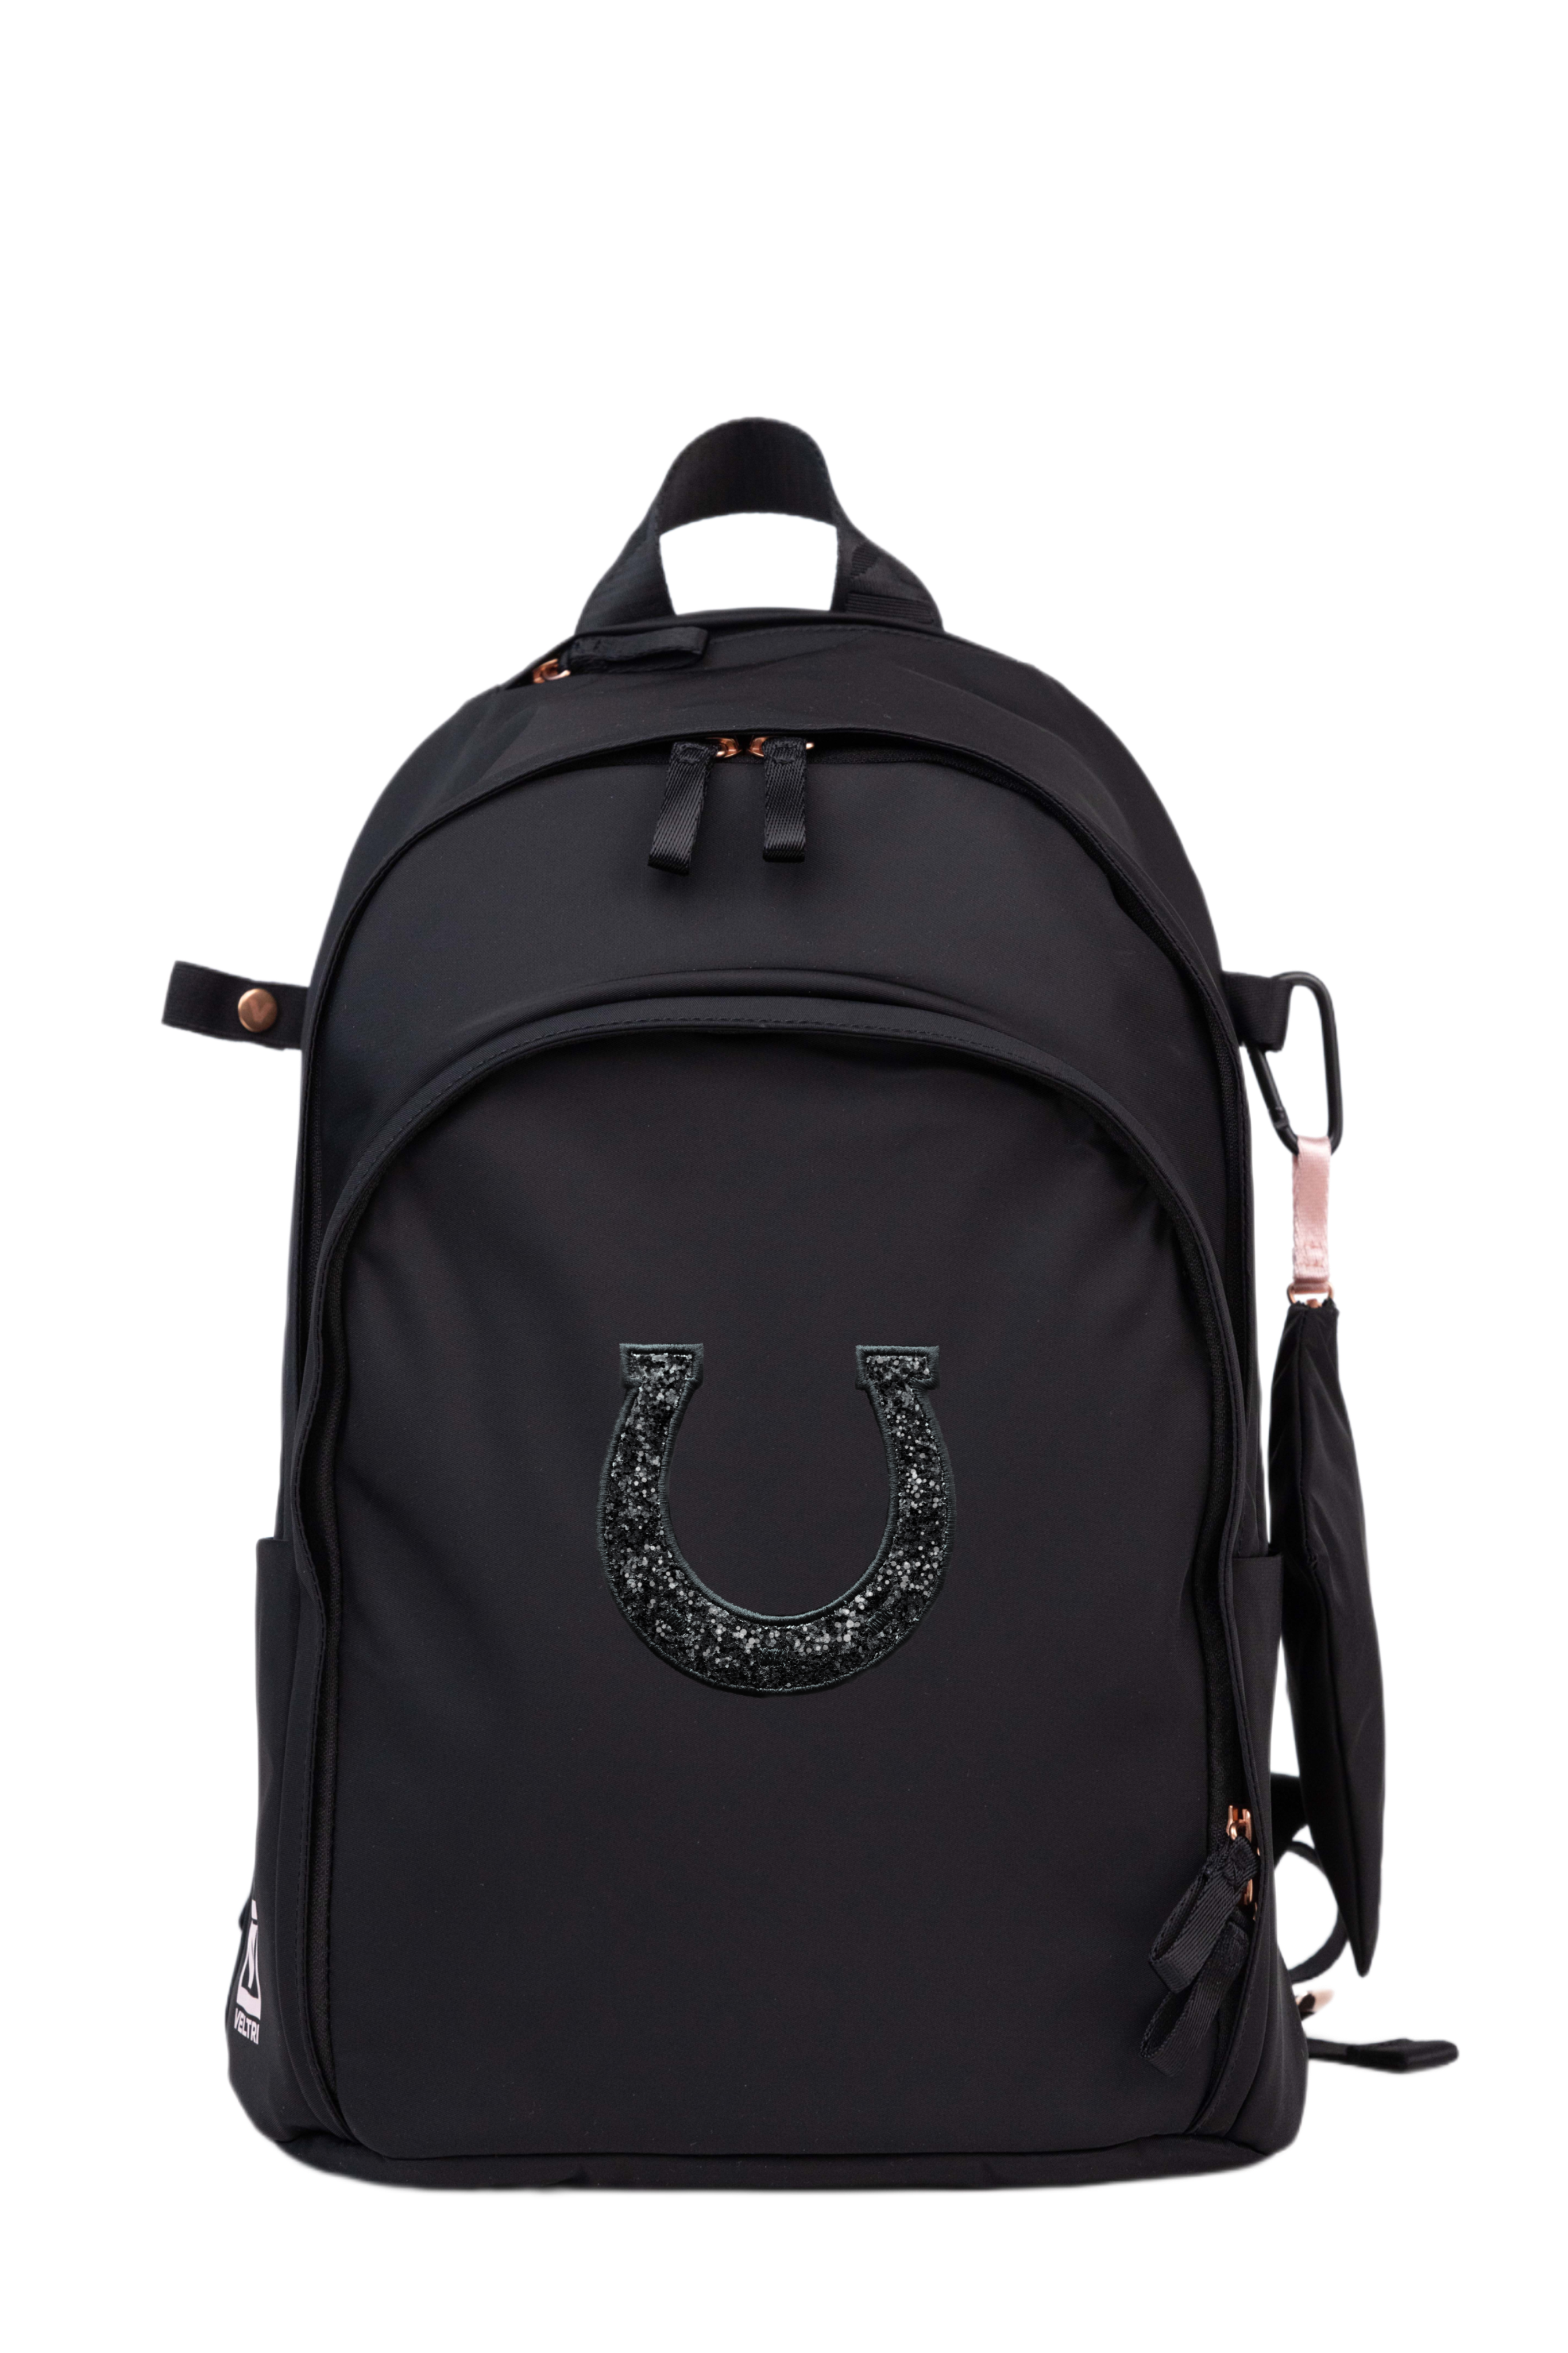 Novelty Backpack “Horse Shoe”